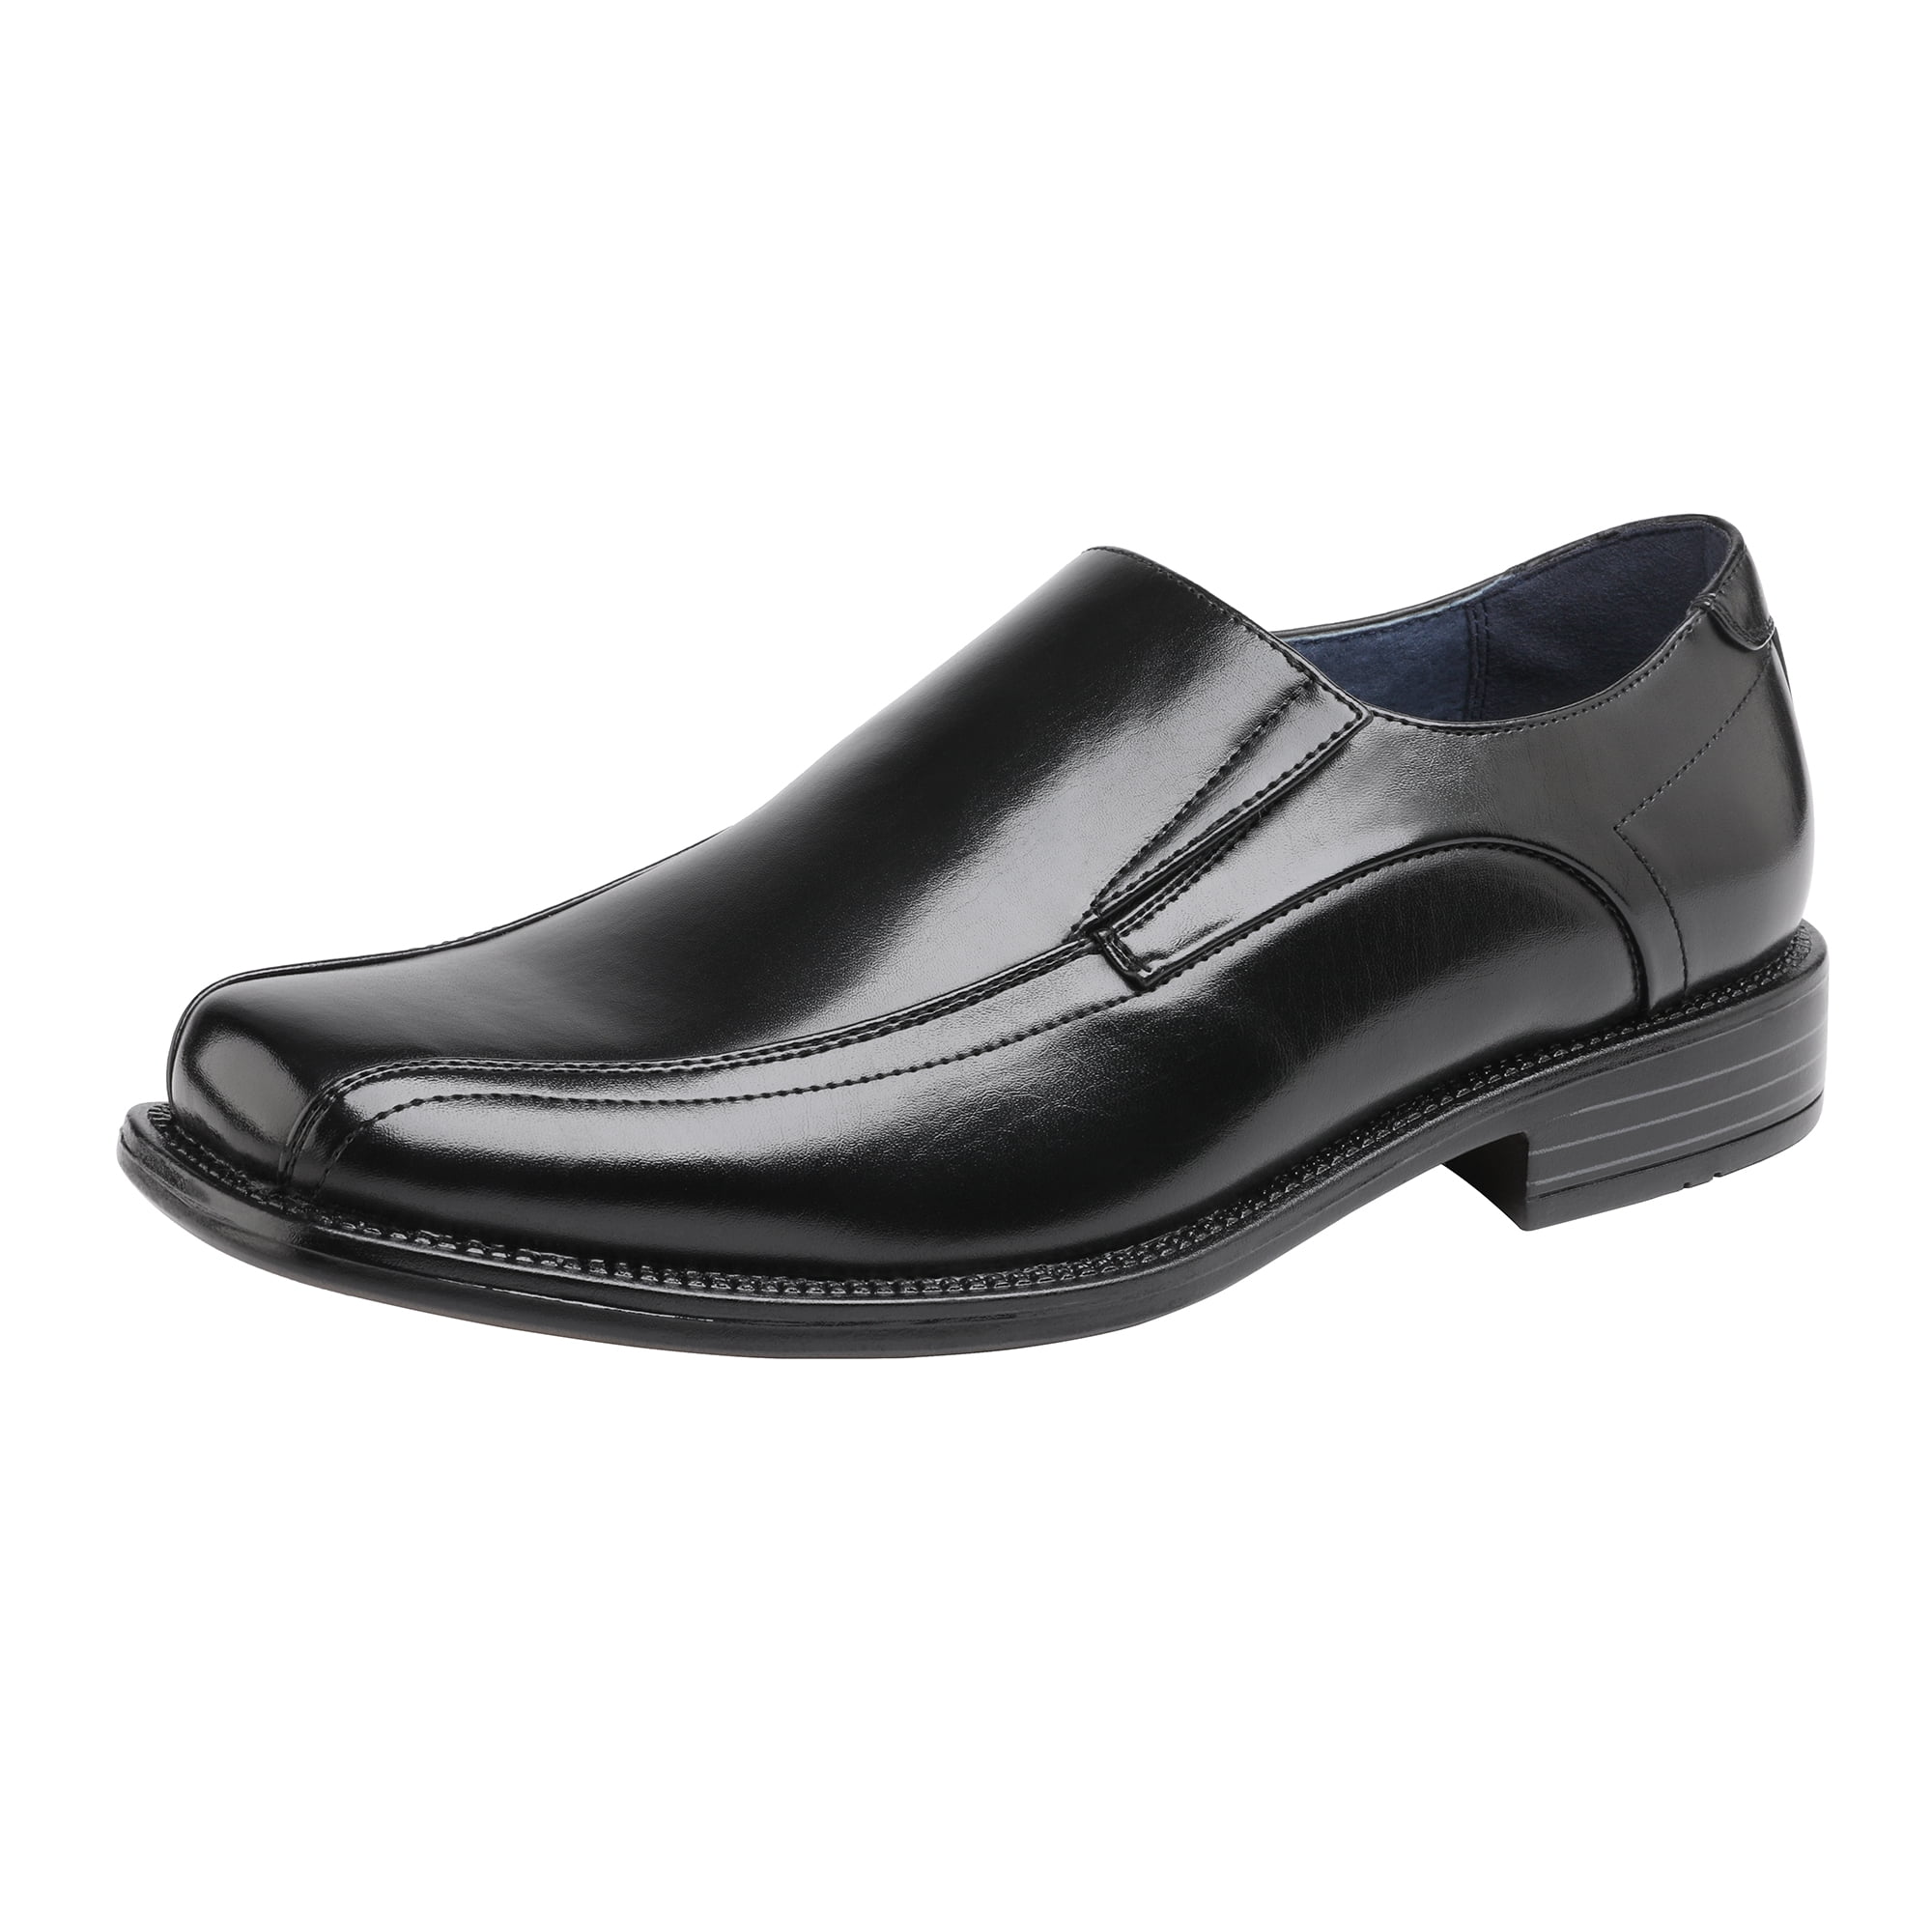 Bruno Marc Men's Goldman-02 Brown Leather Lined Square Toe Dress Loafers  Shoes Size 8 US/ 7 UK: Amazon.co.uk: Fashion